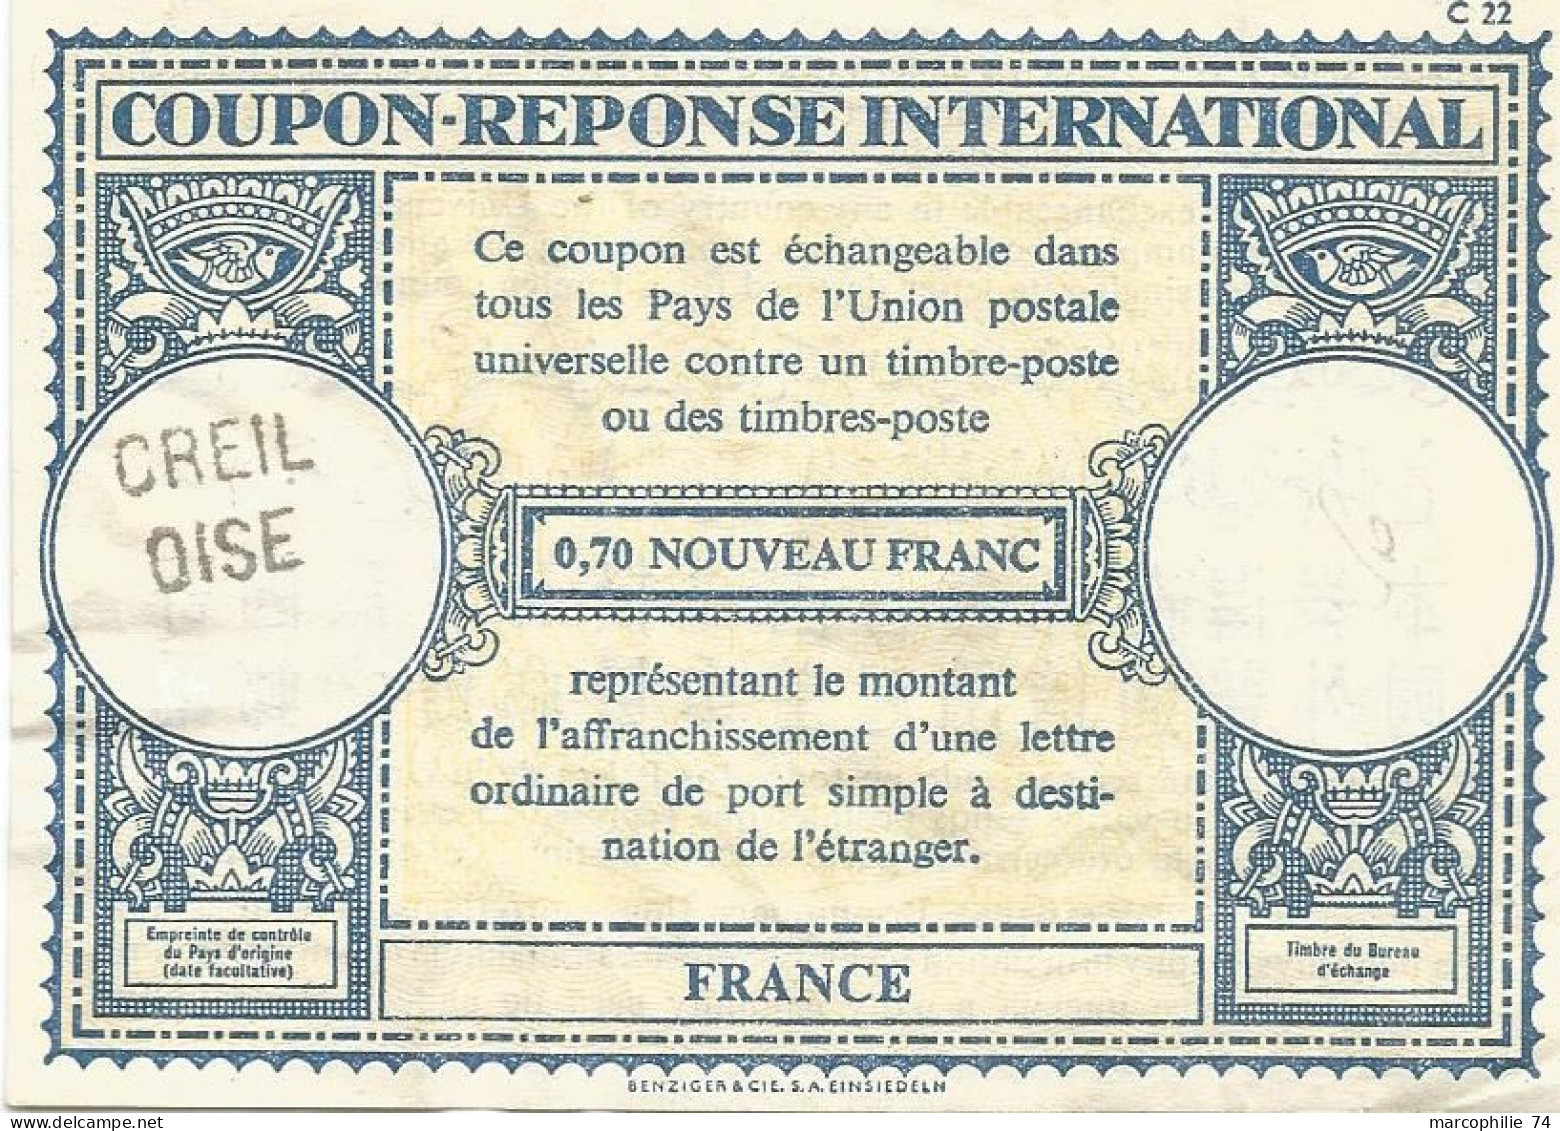 COUPON REPONSE INTERNATIONAL FRANCE 0.70 NOUVEAU FRANC GRIFFE CREIL OISE - Reply Coupons